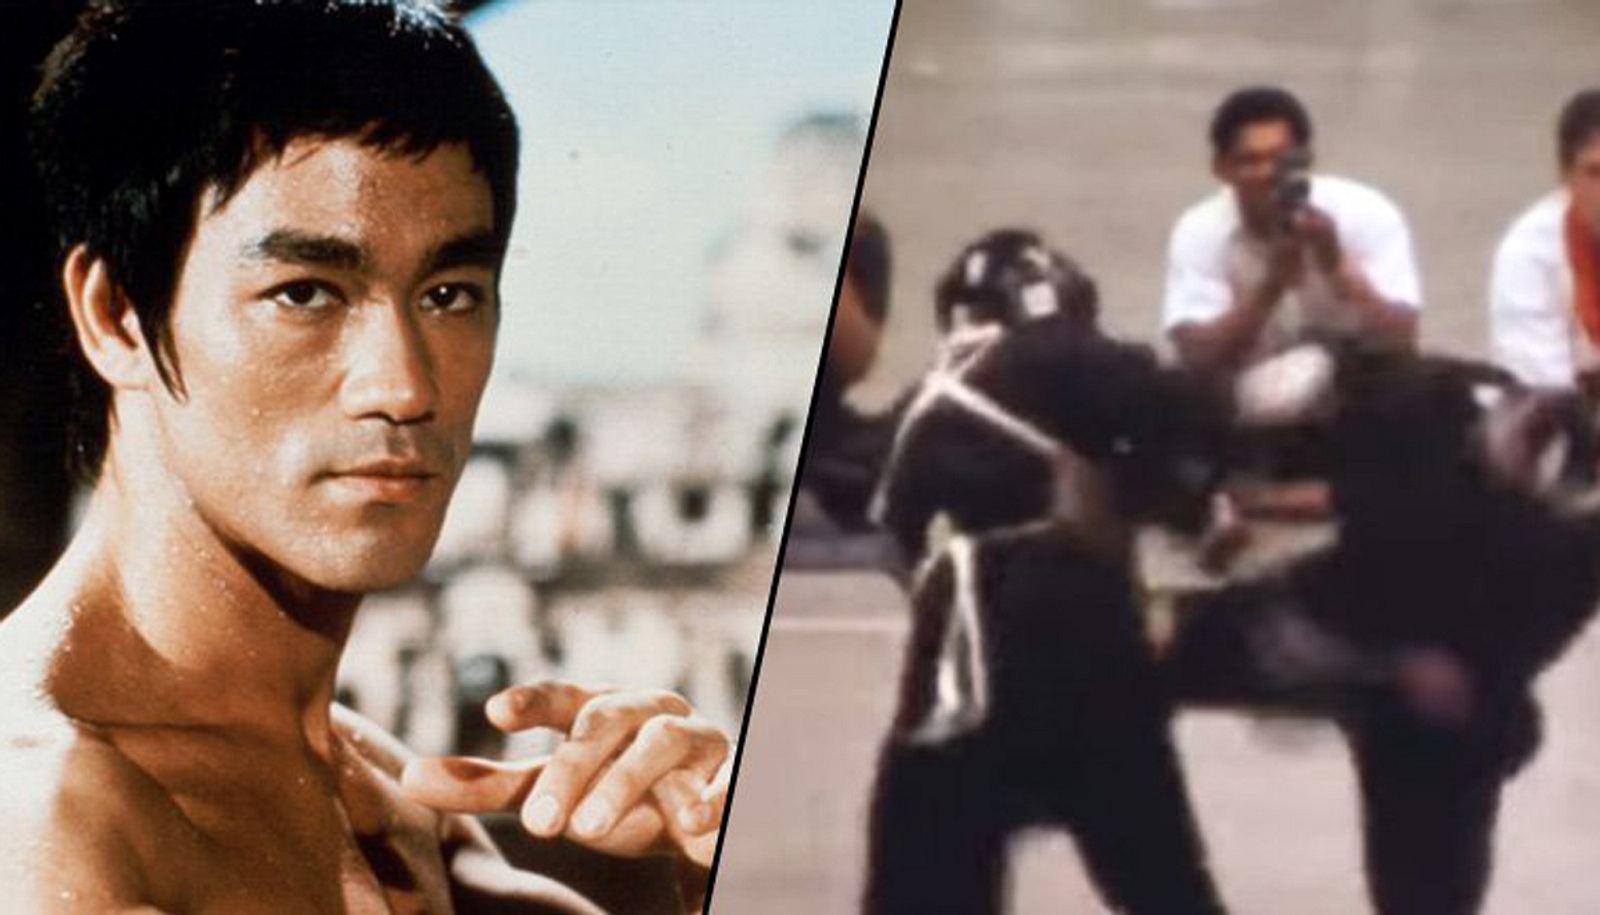 Gerahmter Leinwand Kunstdruck SPORTS Kampf Künstler Actor Jeet Bruce Lee